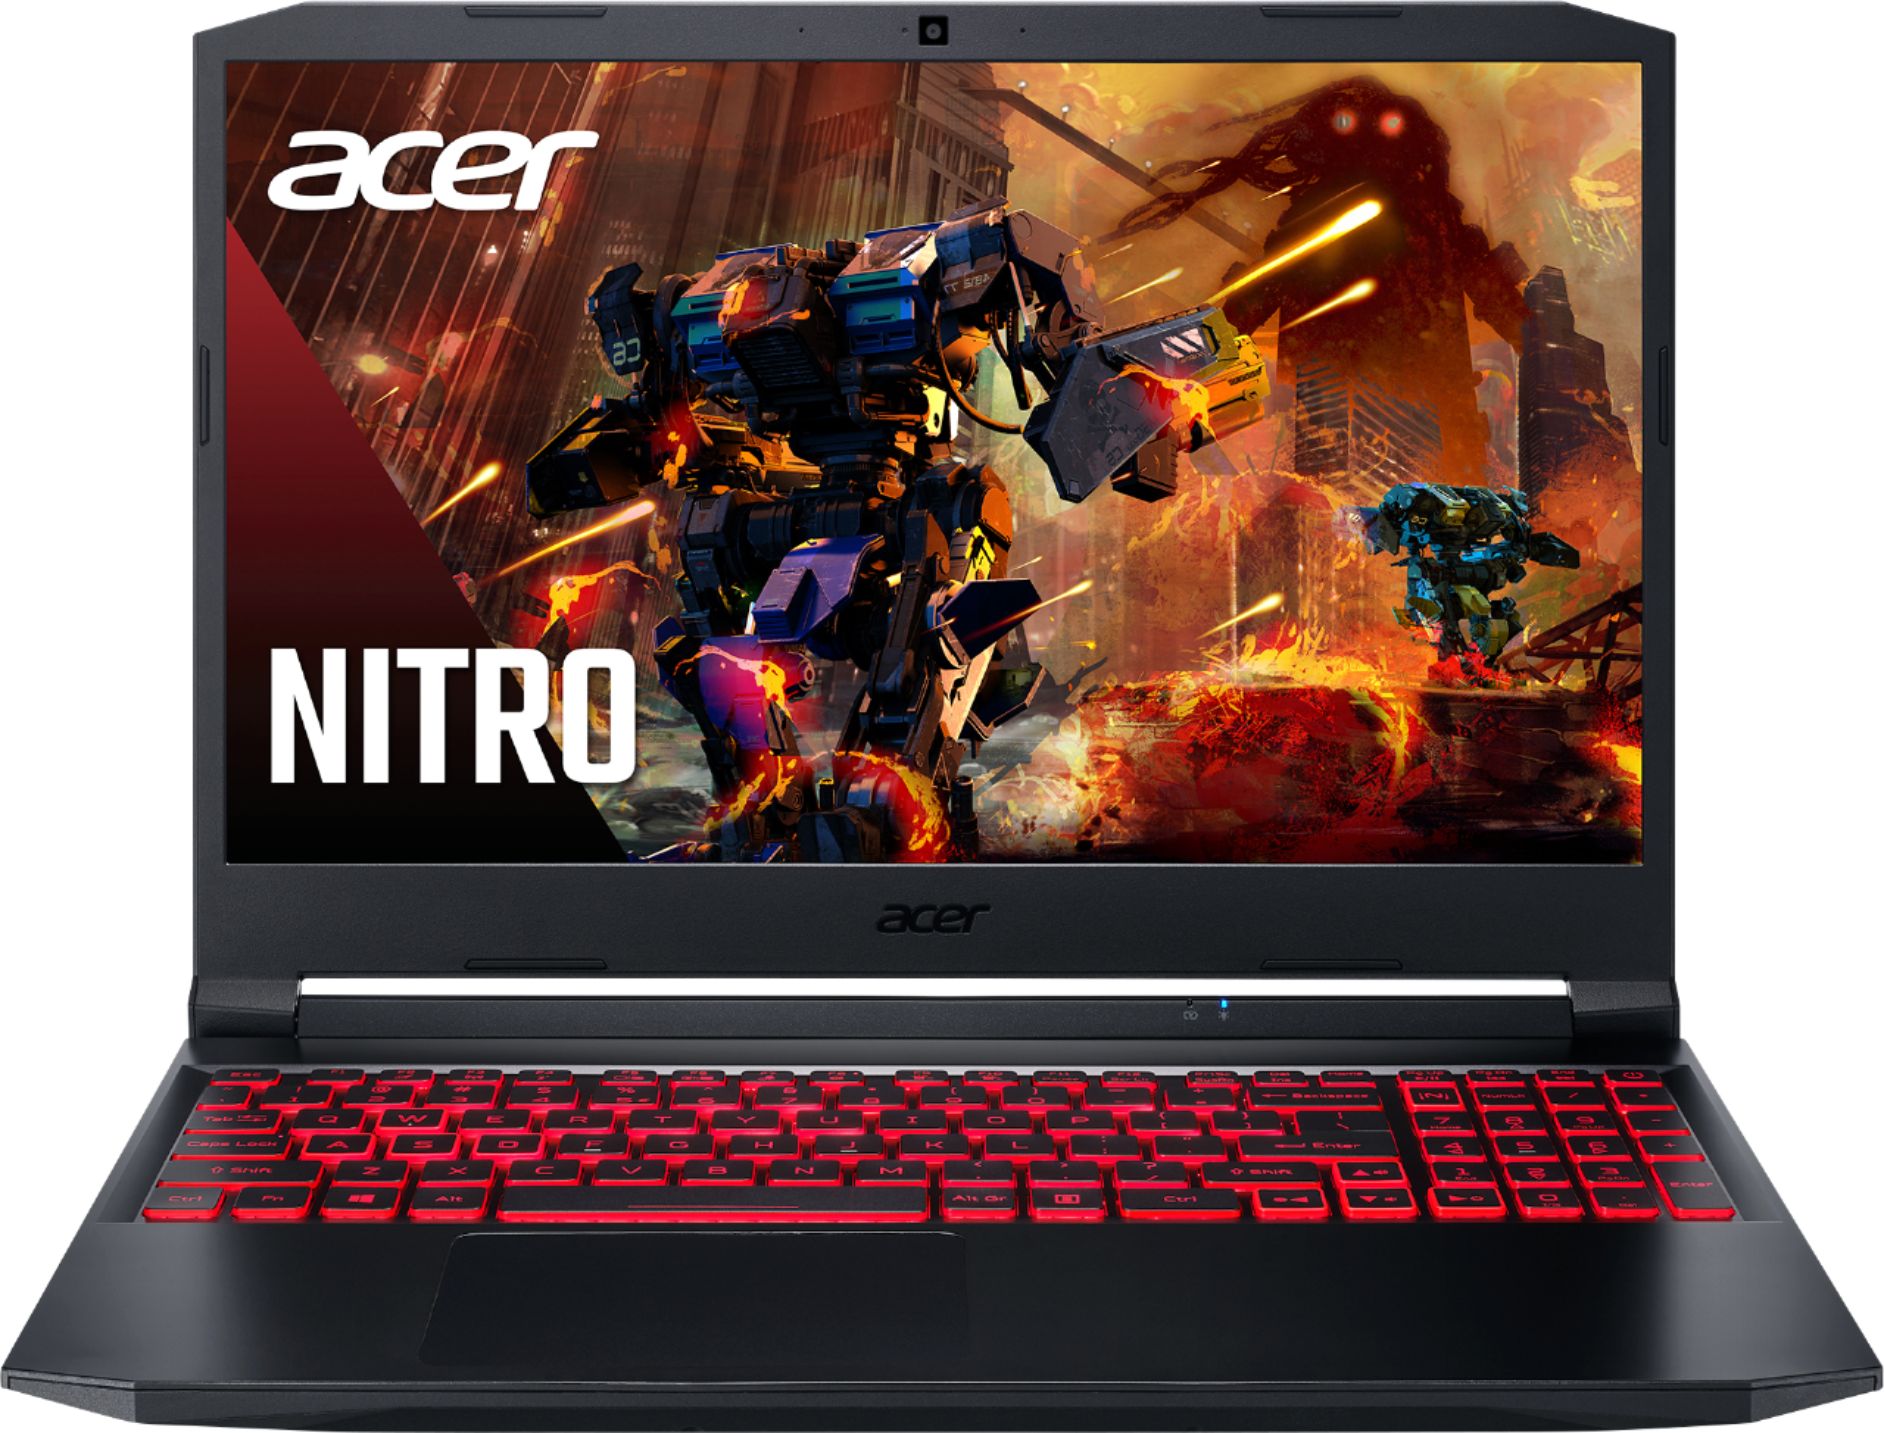 Acer Nitro 5 Intel 11th Gen 6 core 11400h GTX1650 Thunderbolt 4 $750